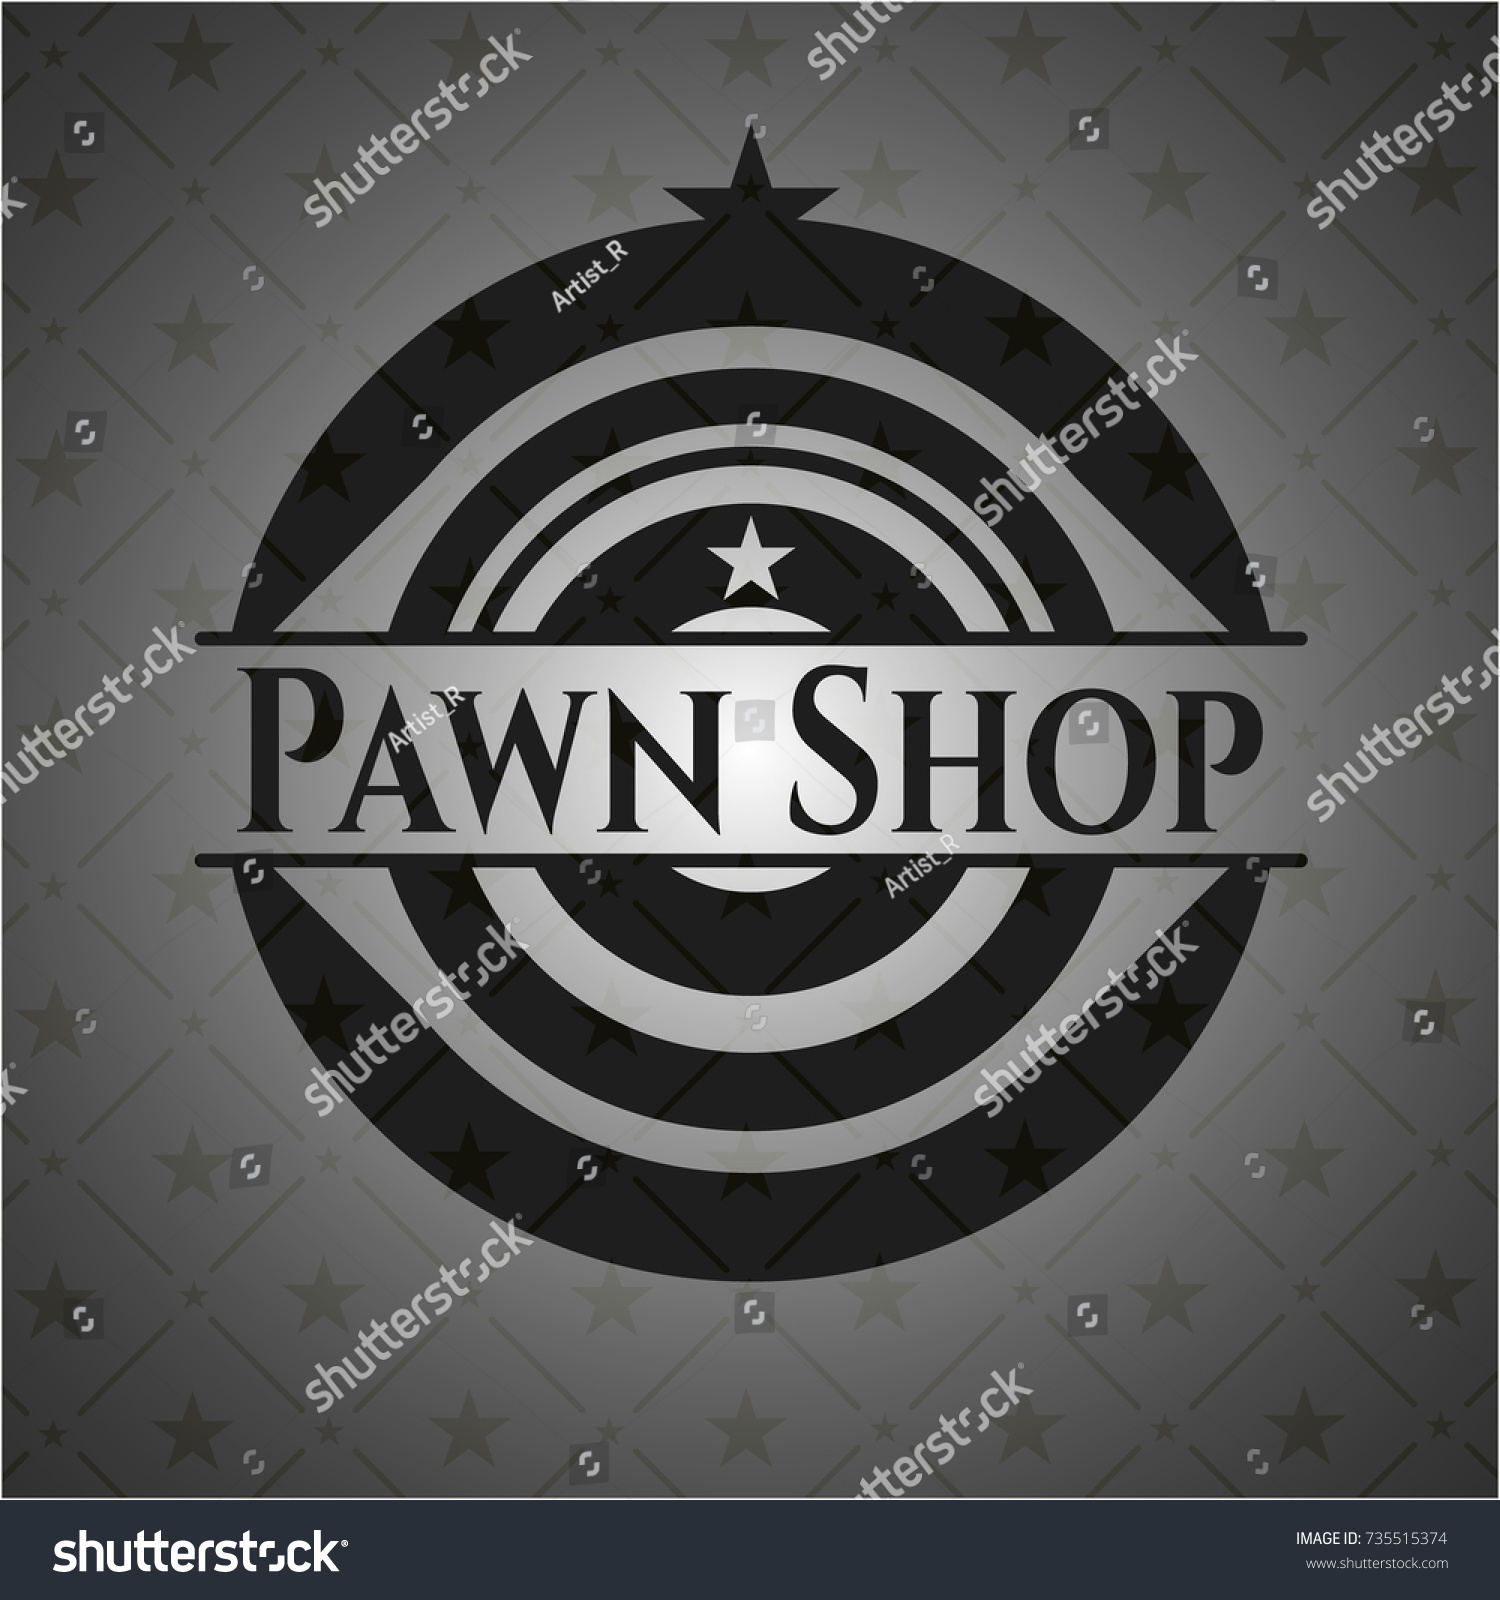 Pawn Shop realistic black emblem #735515374